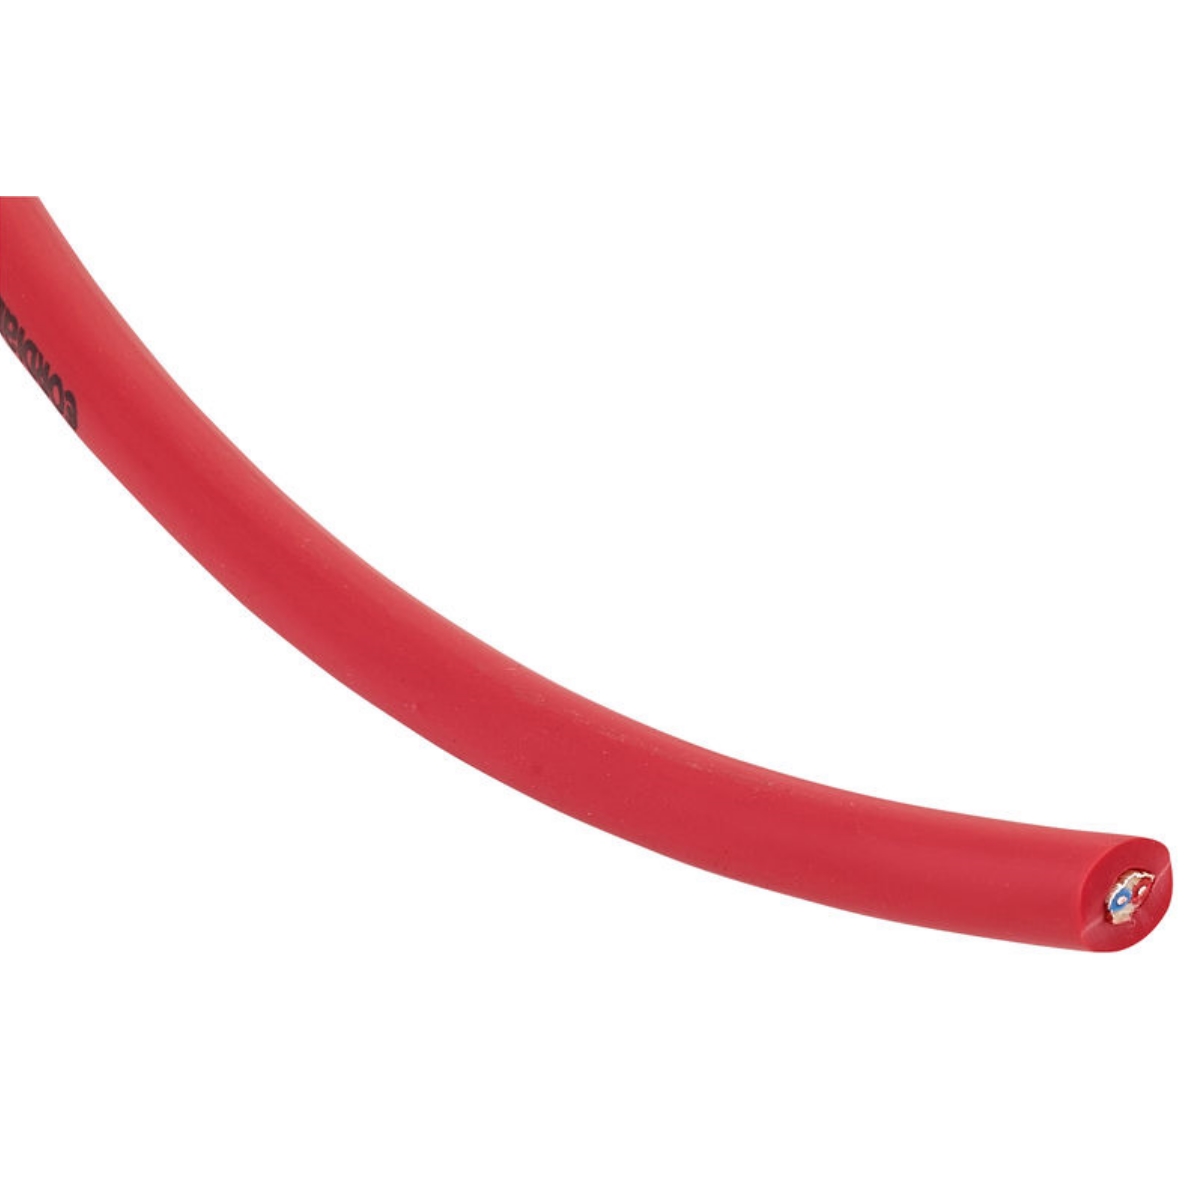 Cordial CMK222 rot Mikrofonkabel/m, 2x 0,22mm², Leiteraufbau 28x 0,10mm, Durchmesser 6,4±0,2mm